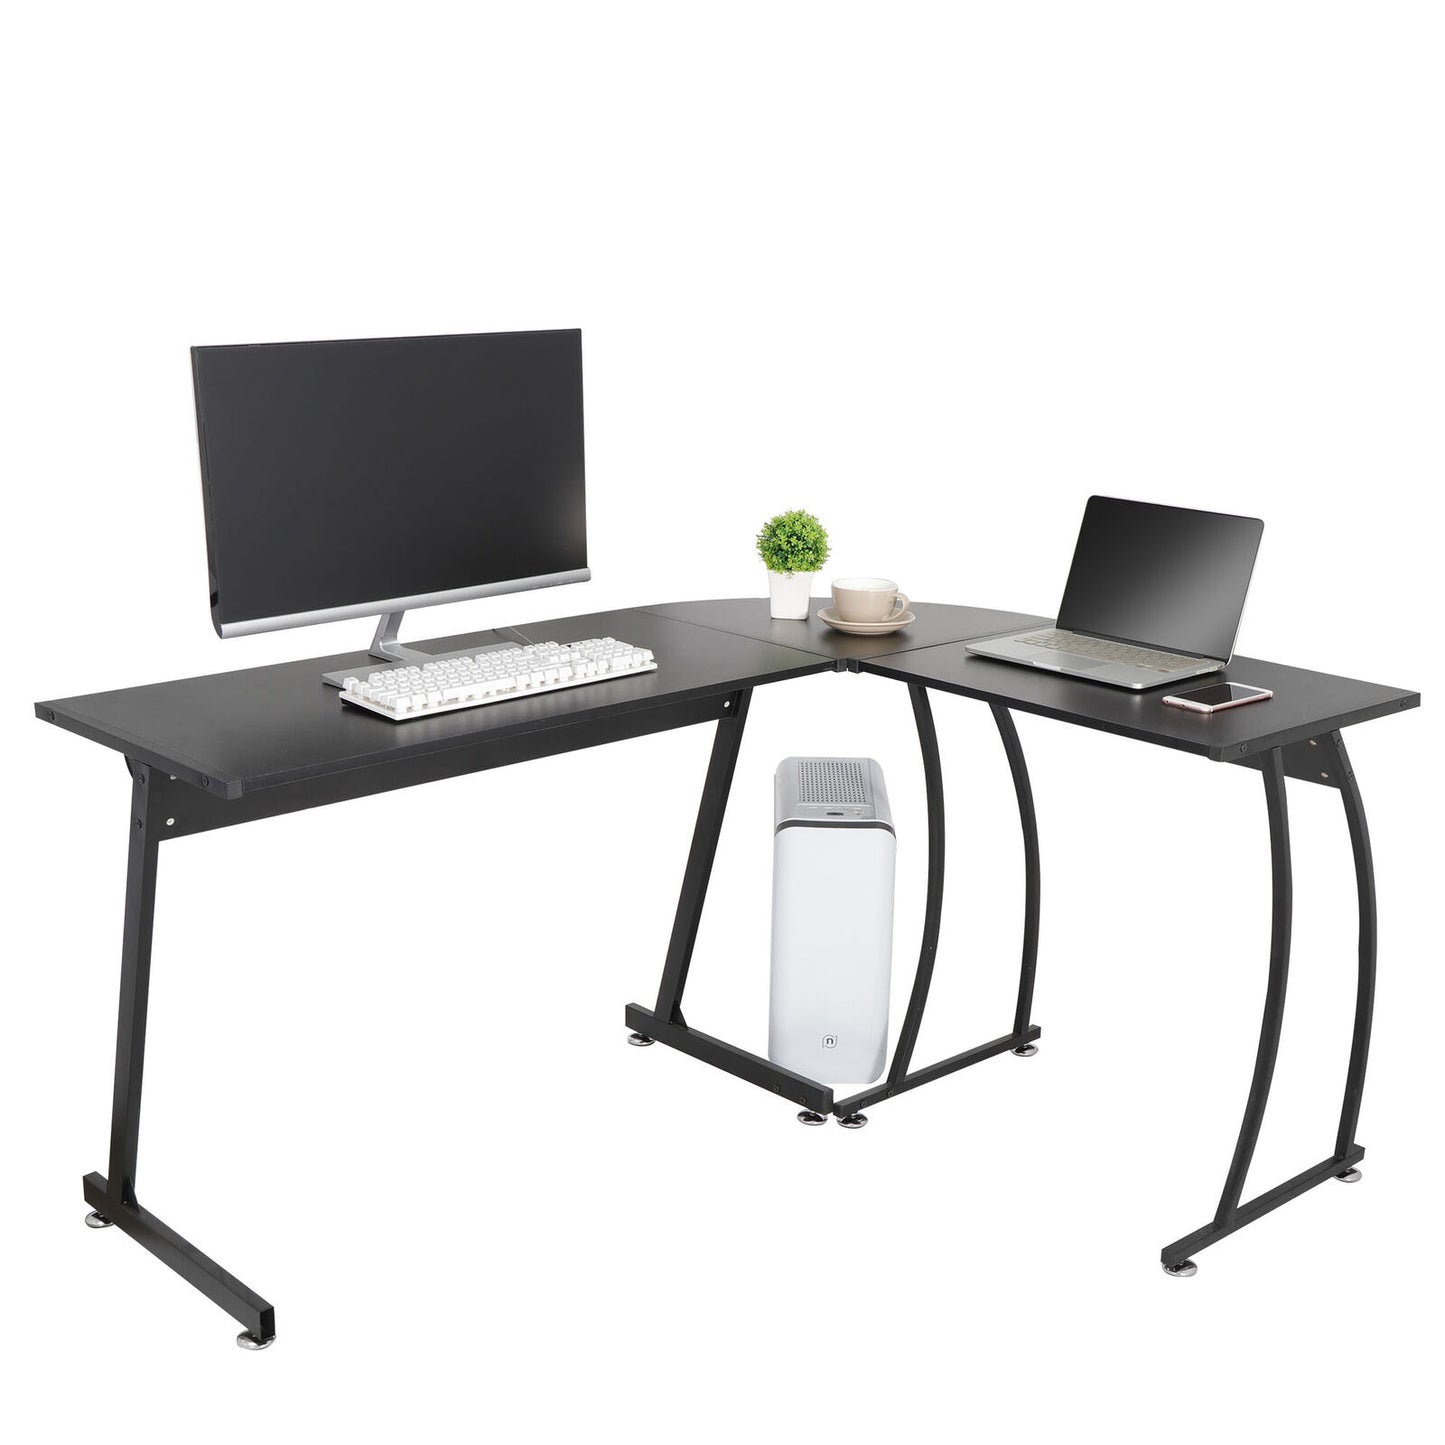 58"L-Shaped Corner Desk Computer Desk Gaming Desk PC Writting Table Home Office